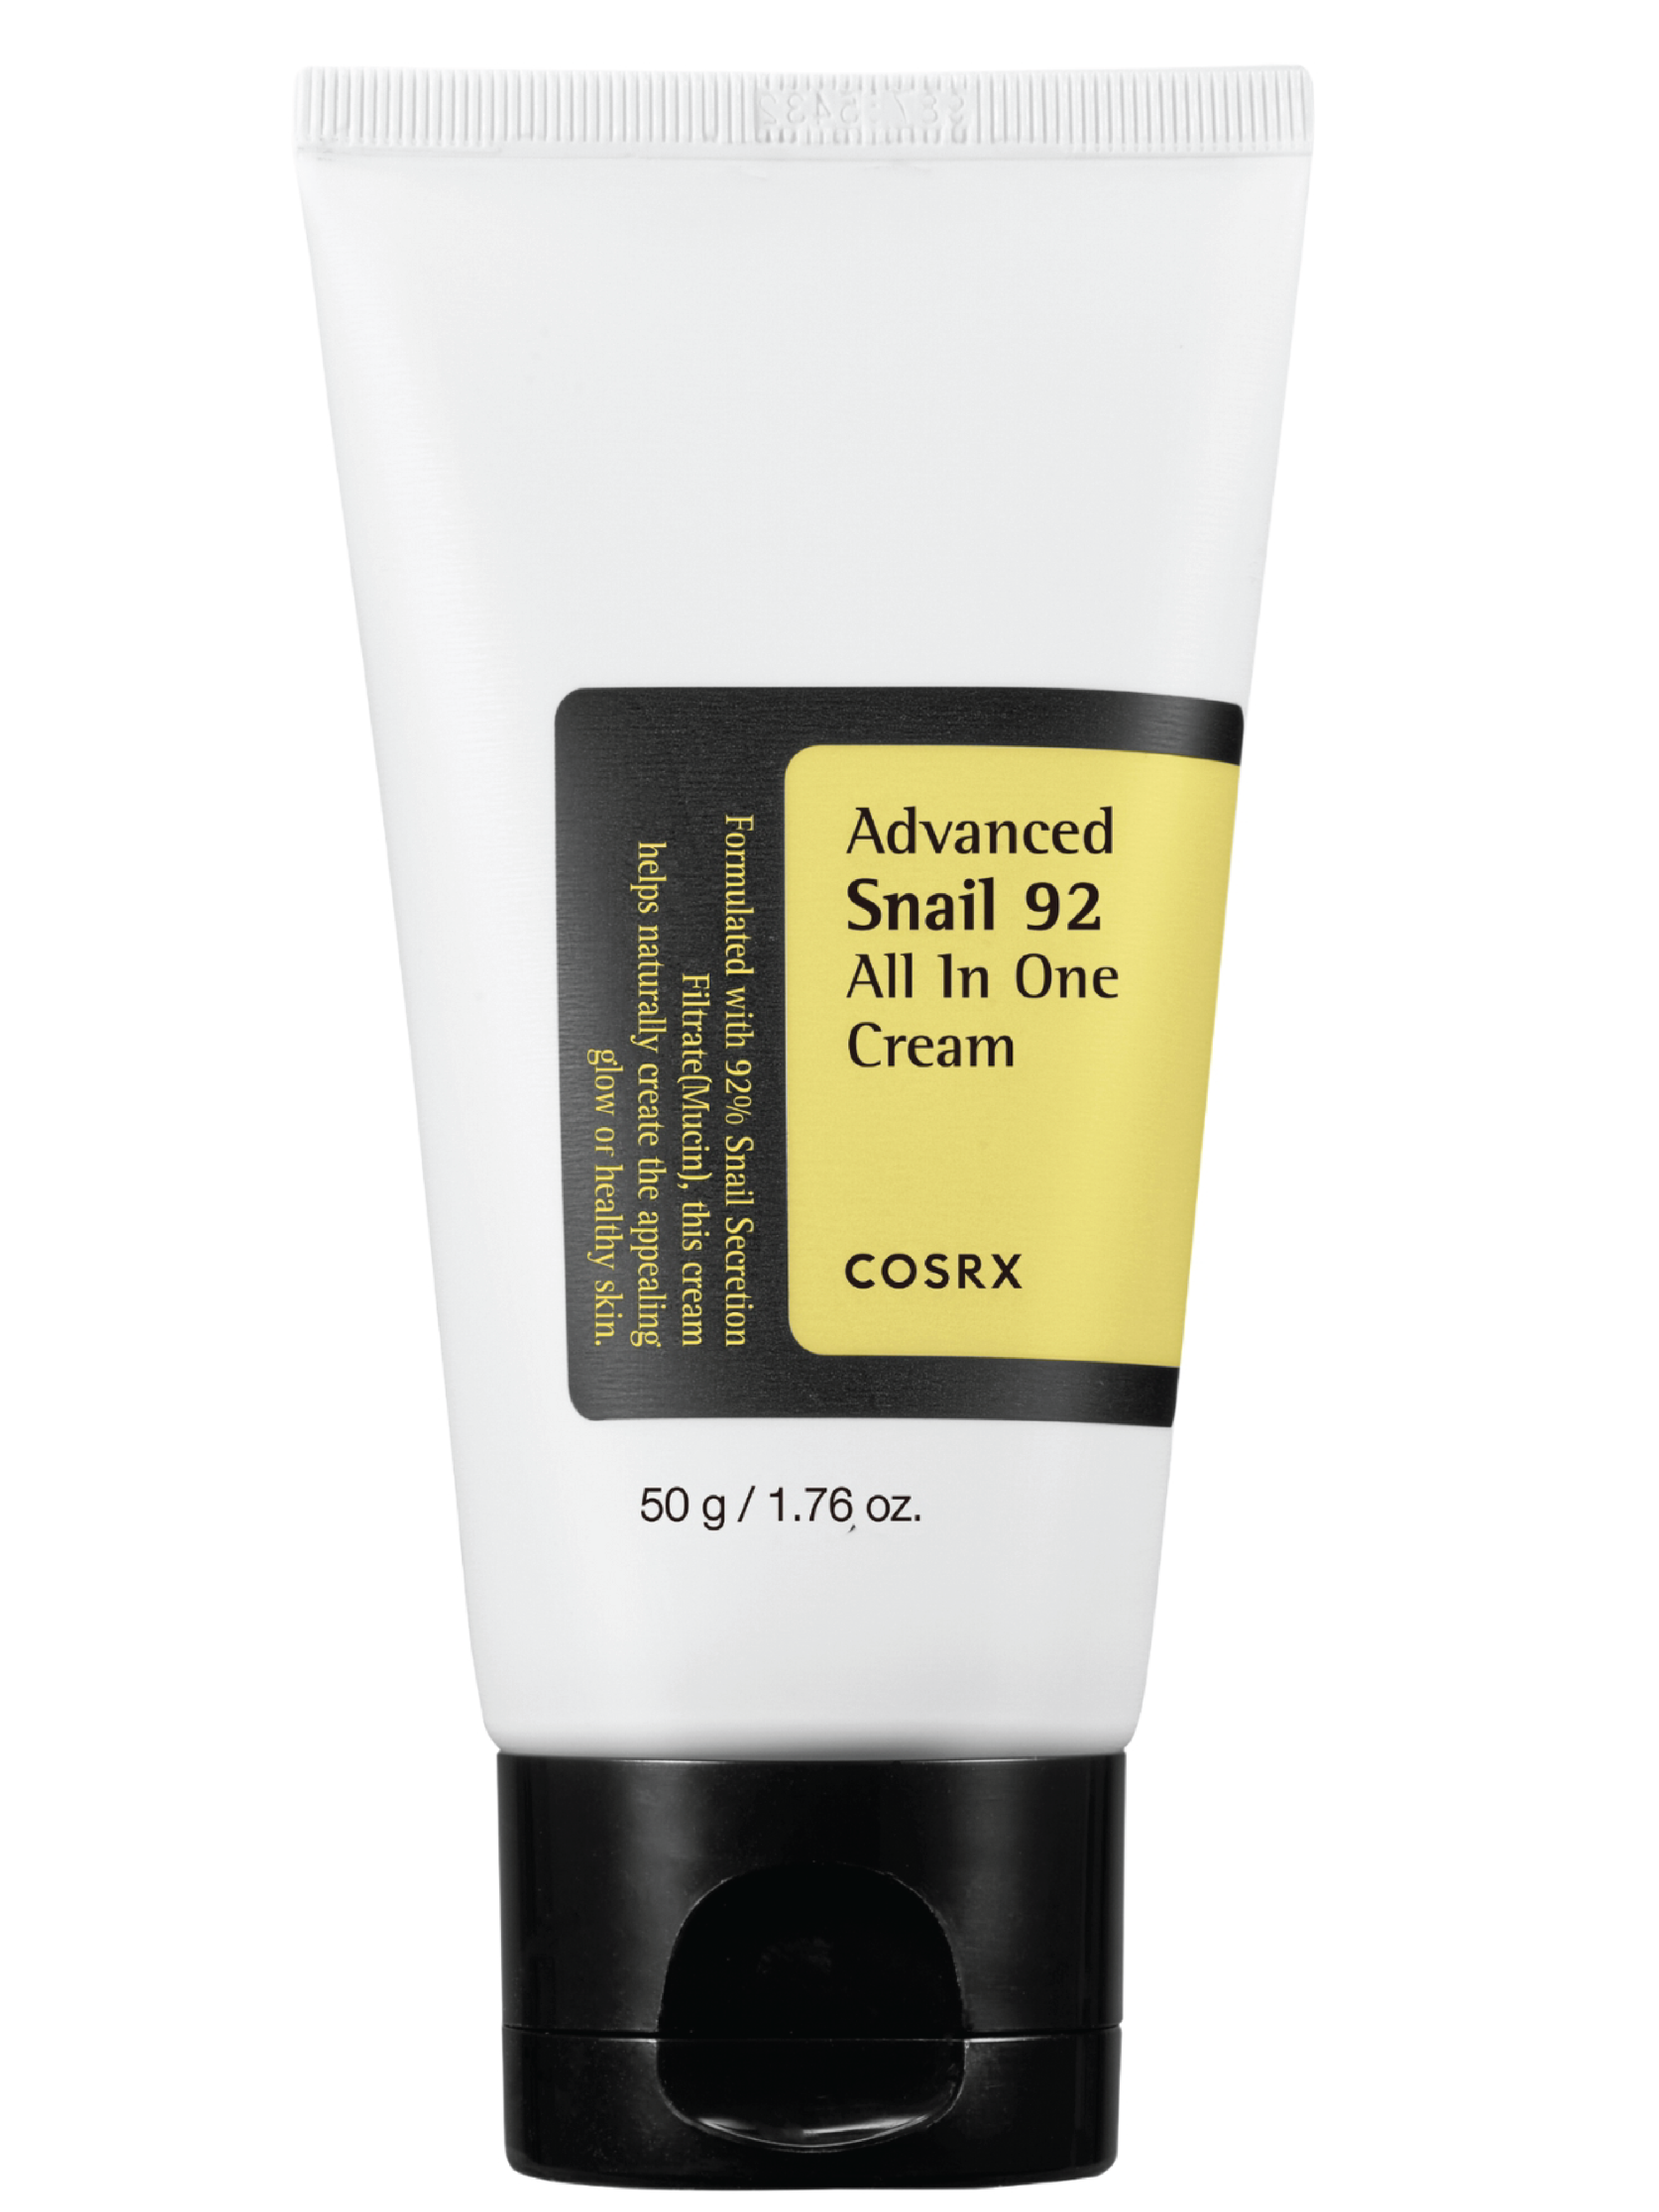 COSRX Advanced Snail 92 All In One Cream Tube, 50 g